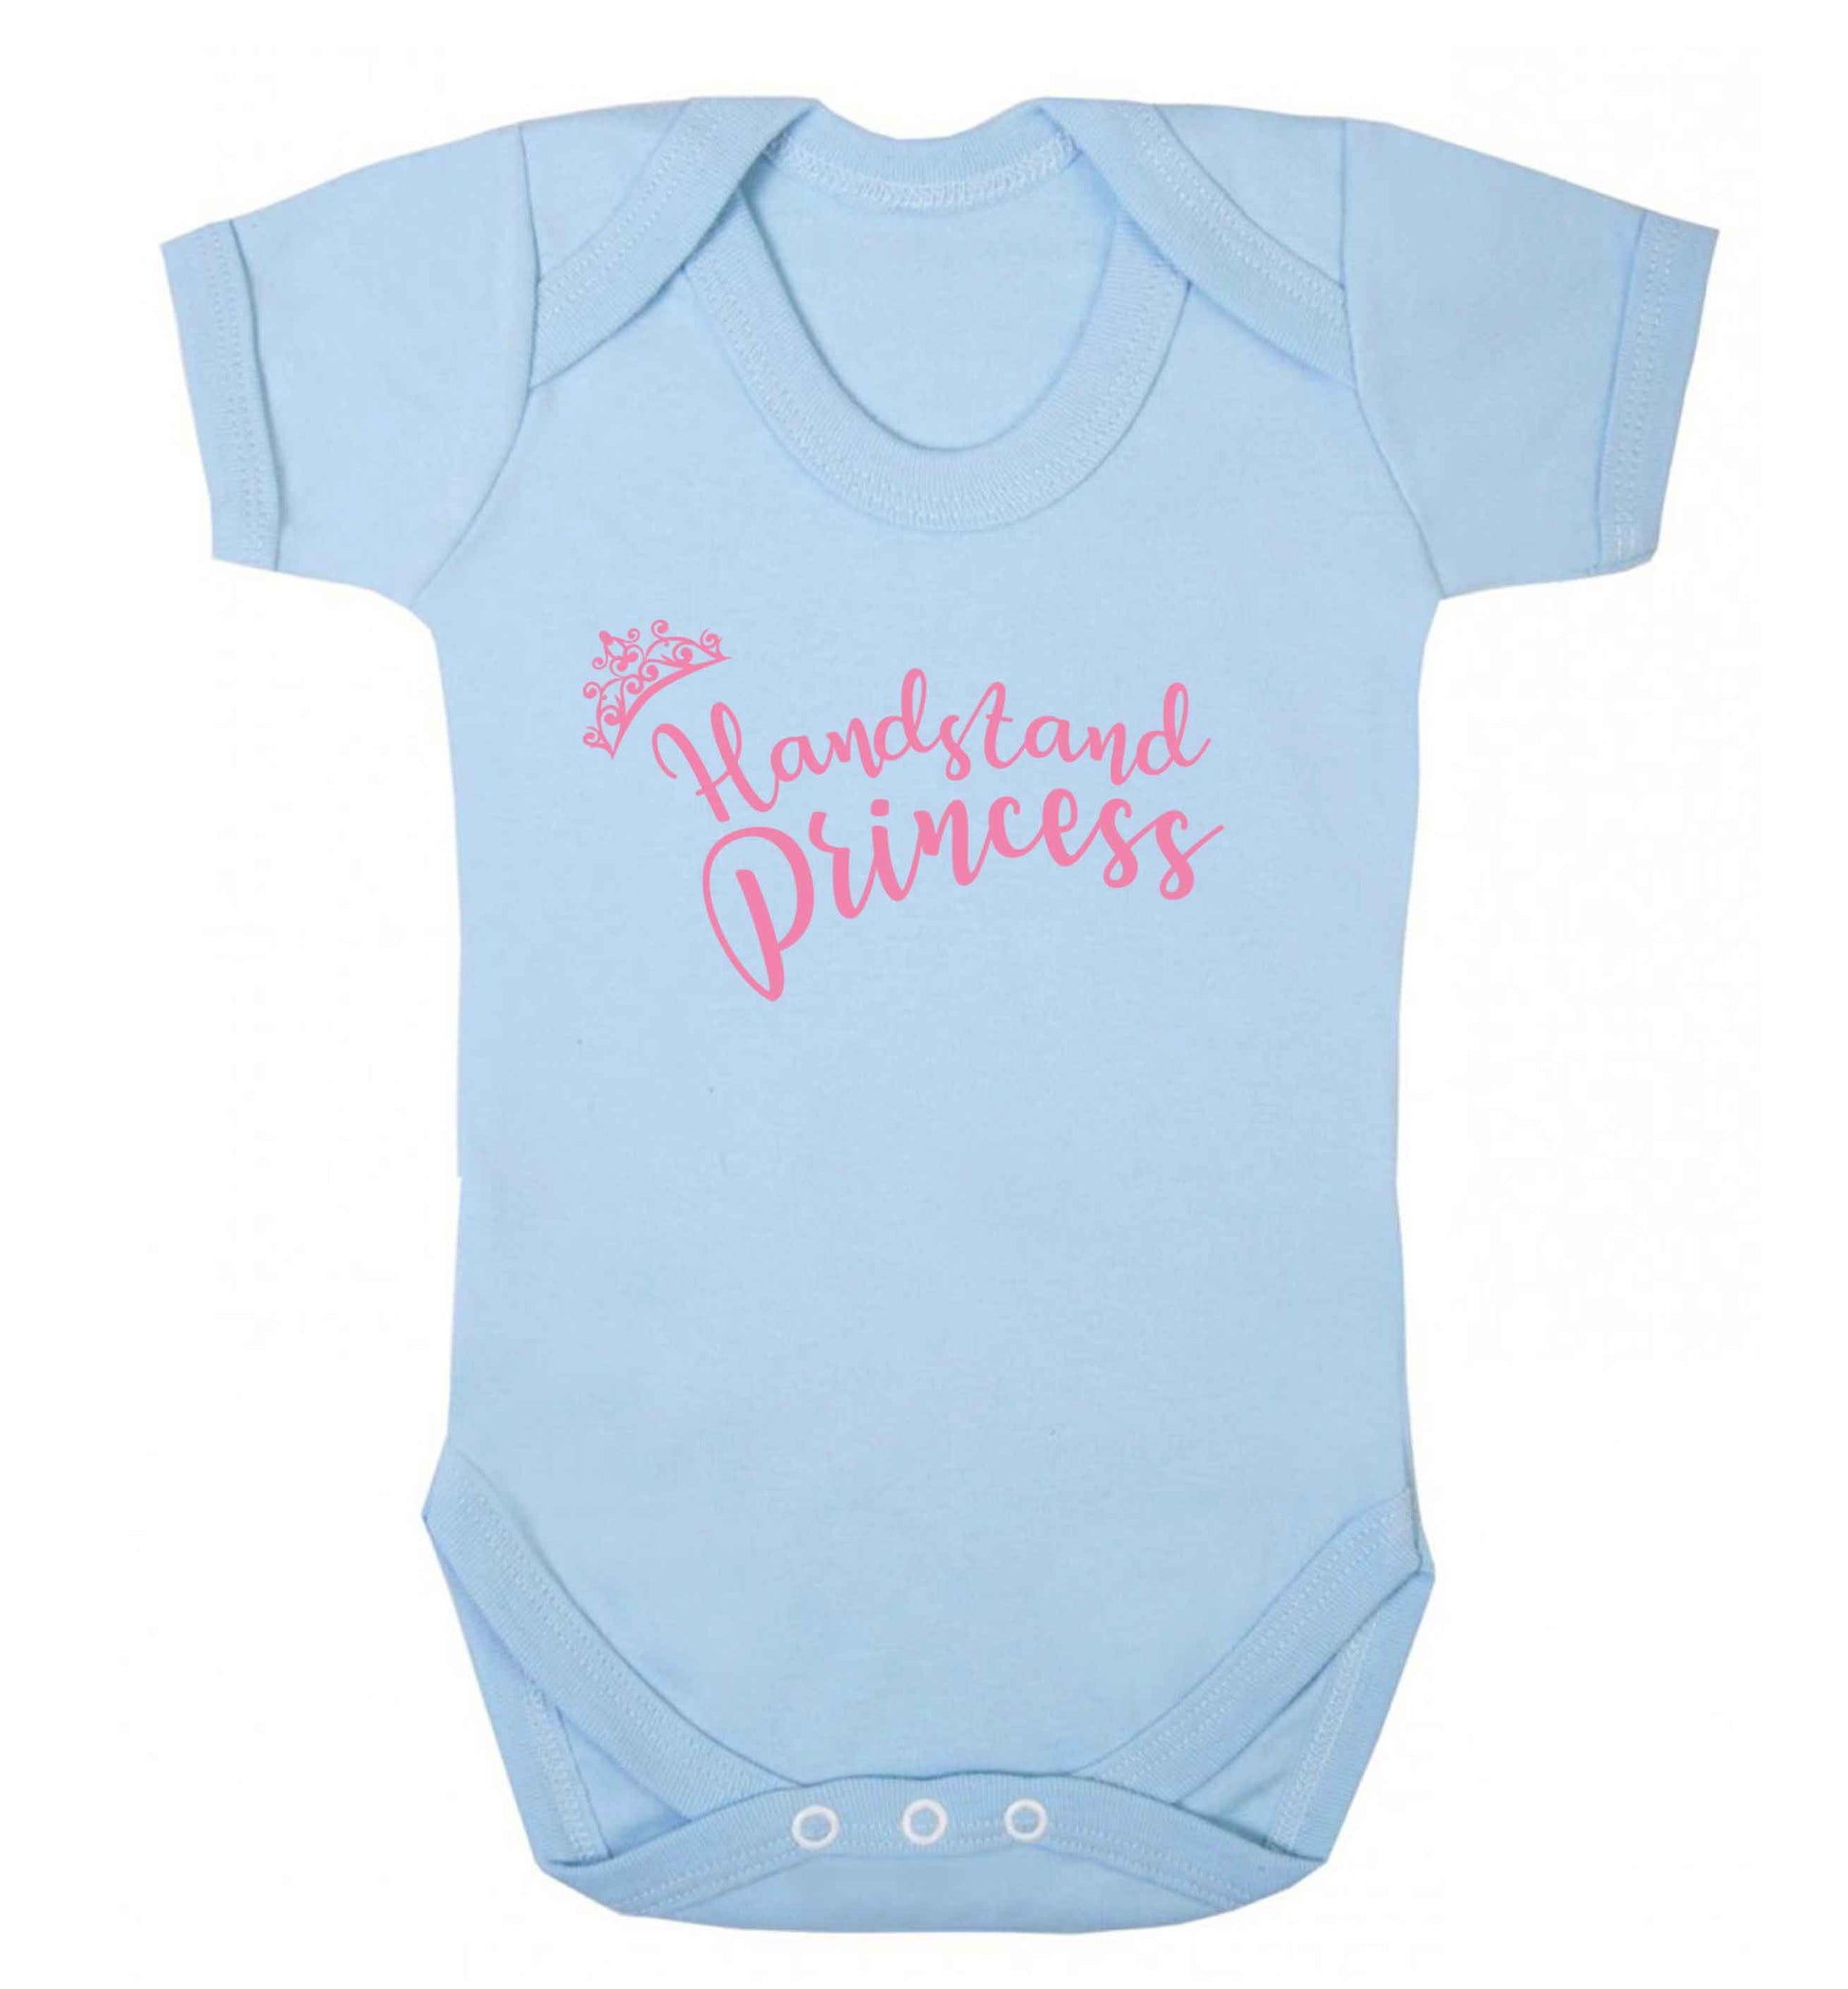 Handstand princess Baby Vest pale blue 18-24 months